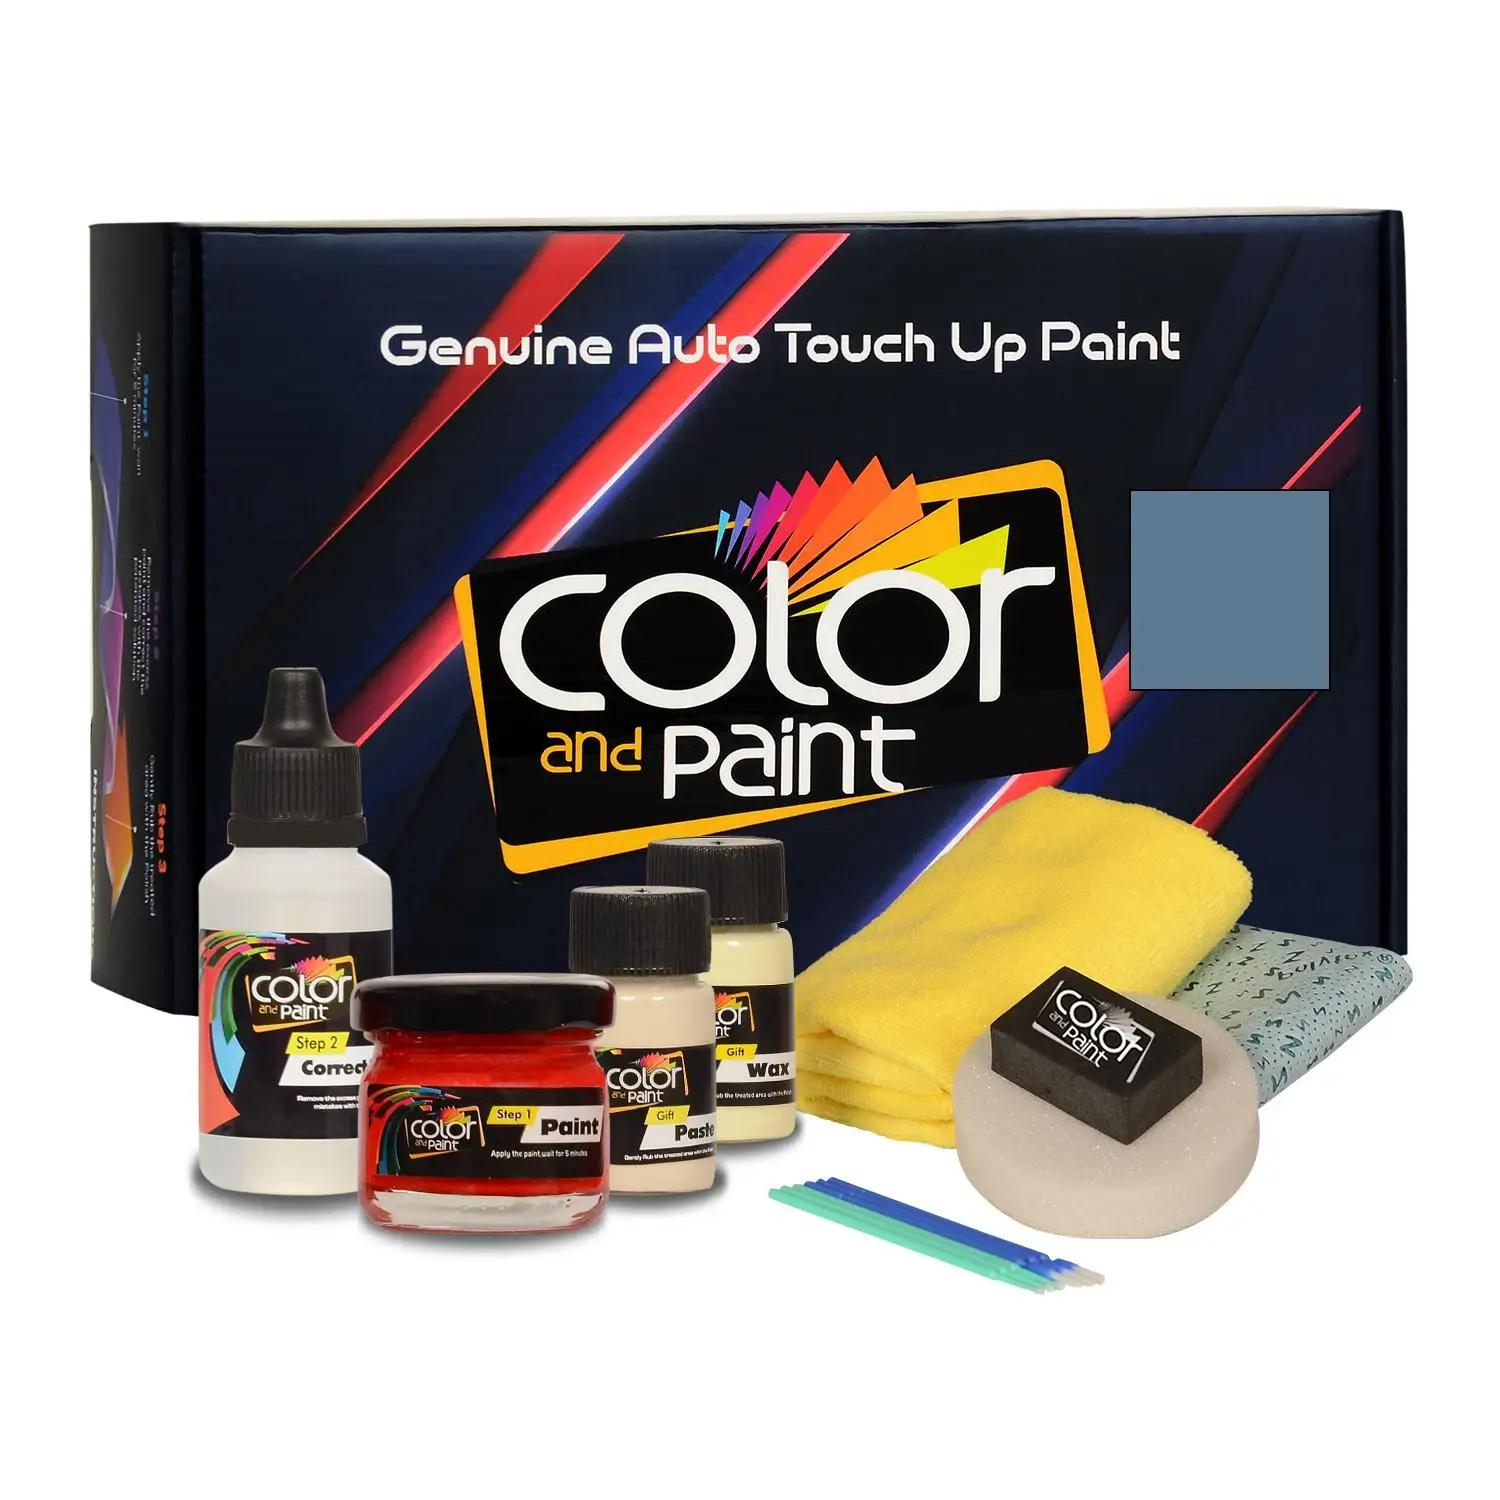 

Color and Paint compatible with Mercedes Automotive Touch Up Paint - TAUBENBLAU - 5519 - Basic Care